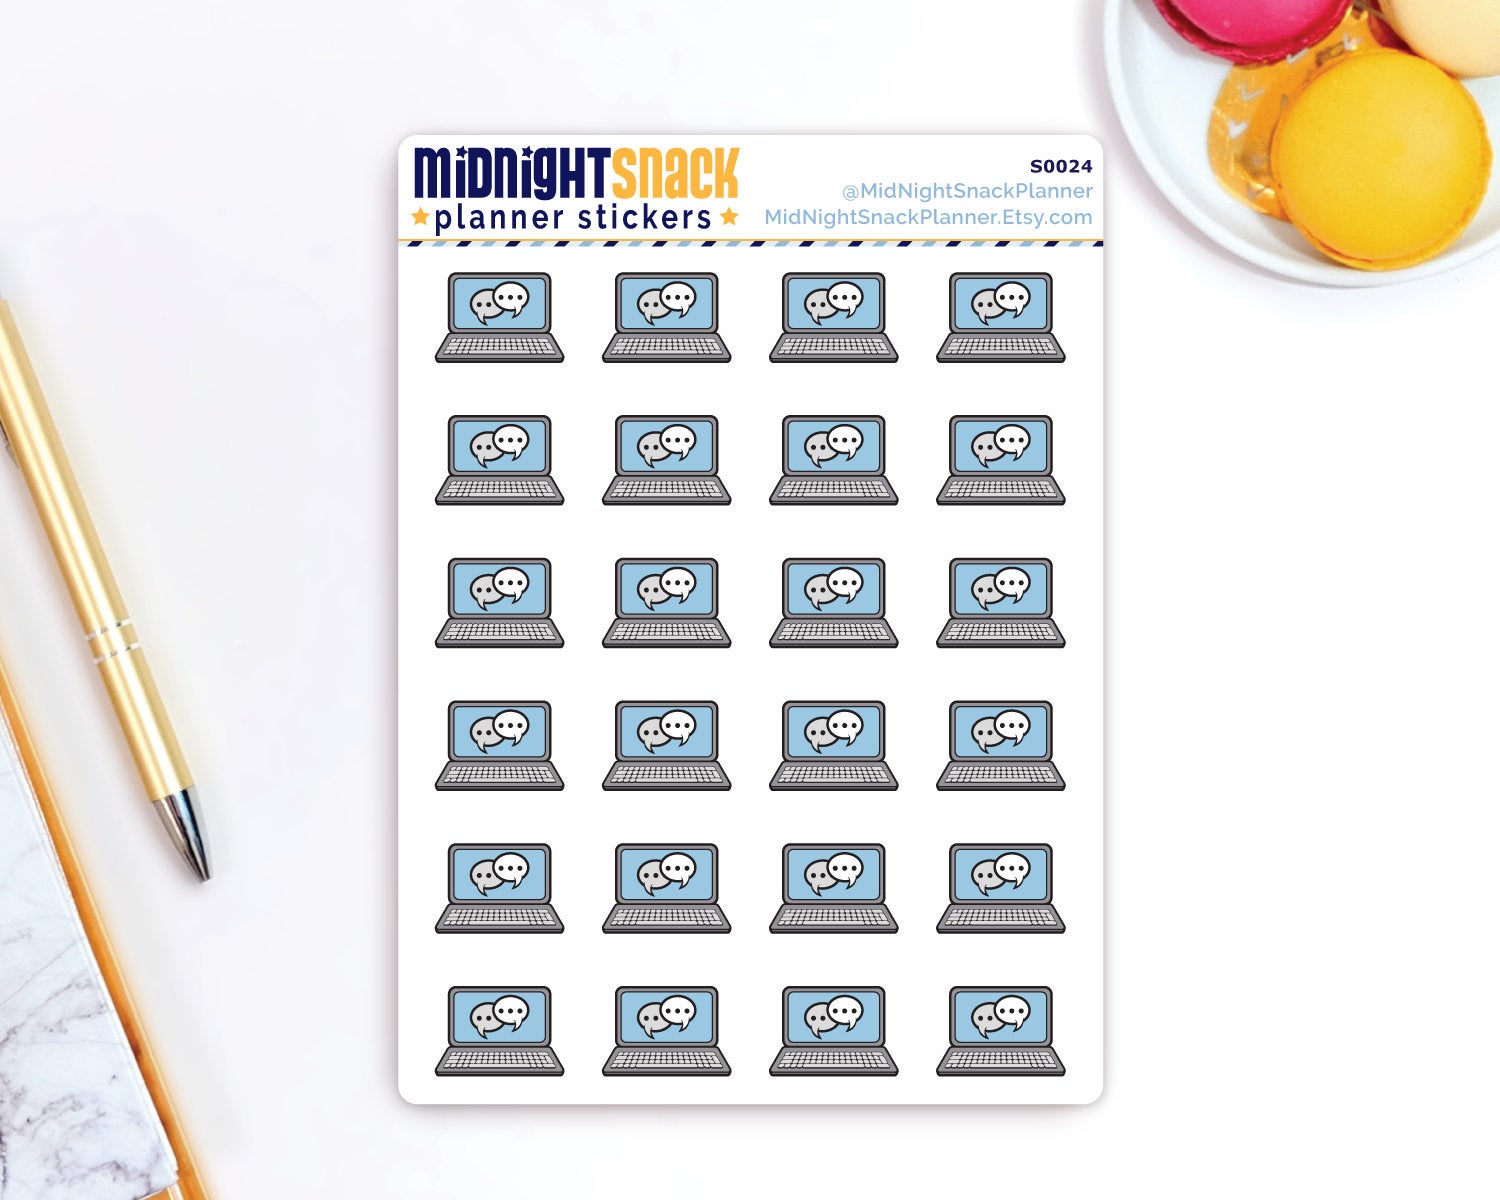 Online Meeting Icon: Work and Business Planner Sticker Midnight Snack Planner